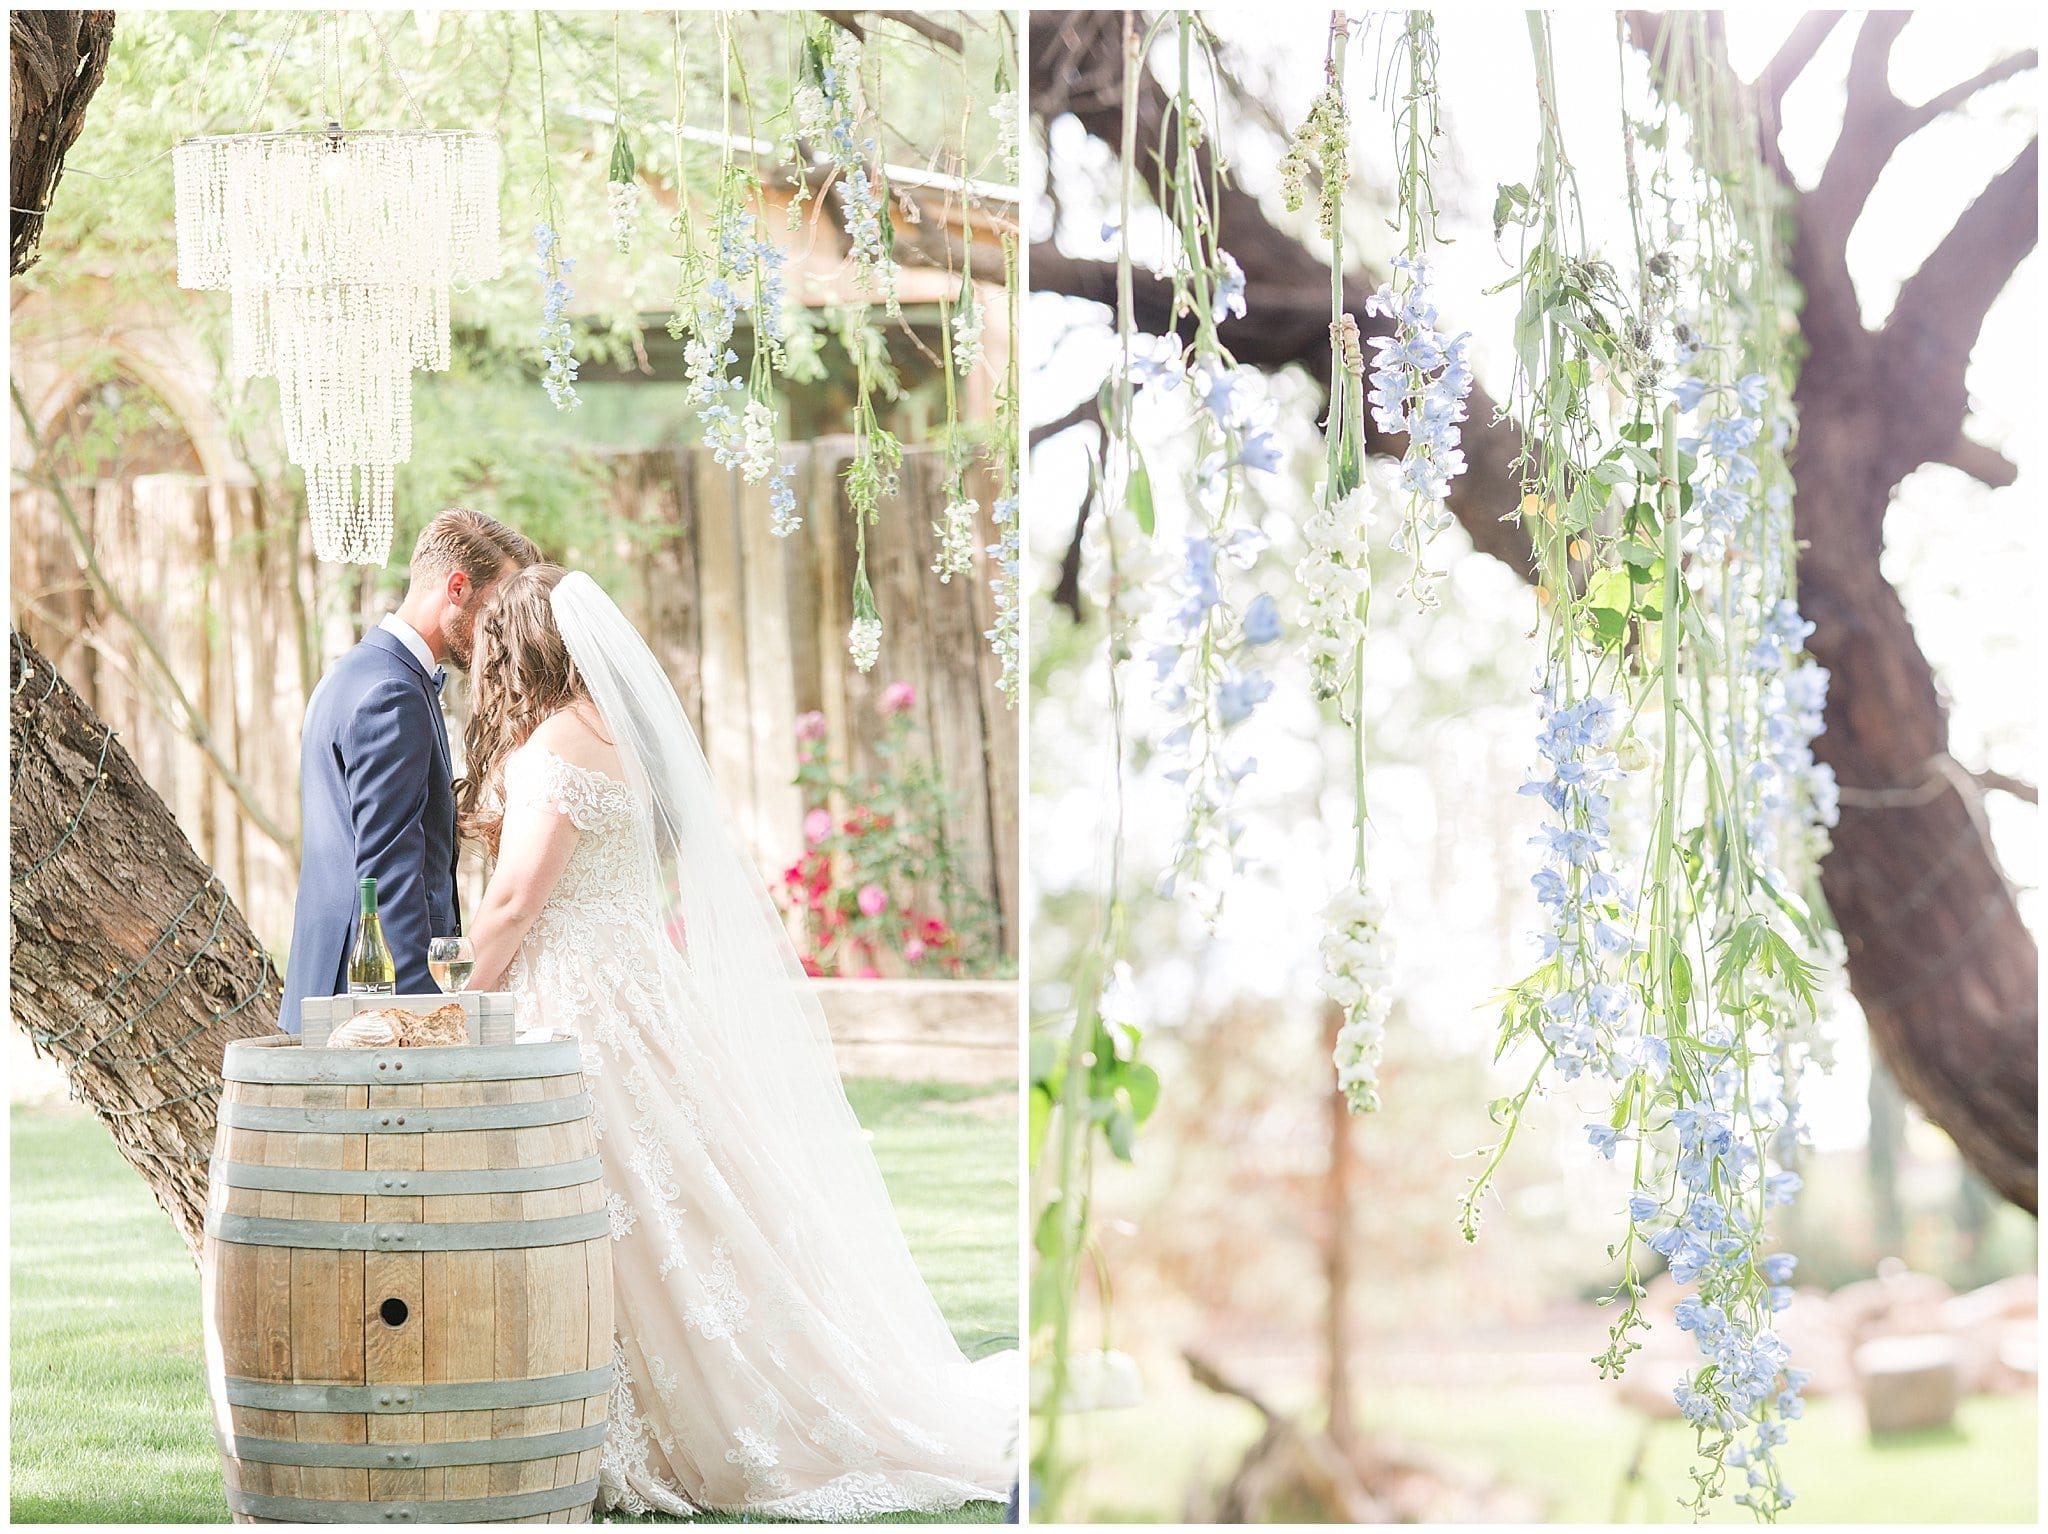 Windmill Winery Twisted Tree Wedding Ceremony - Communion